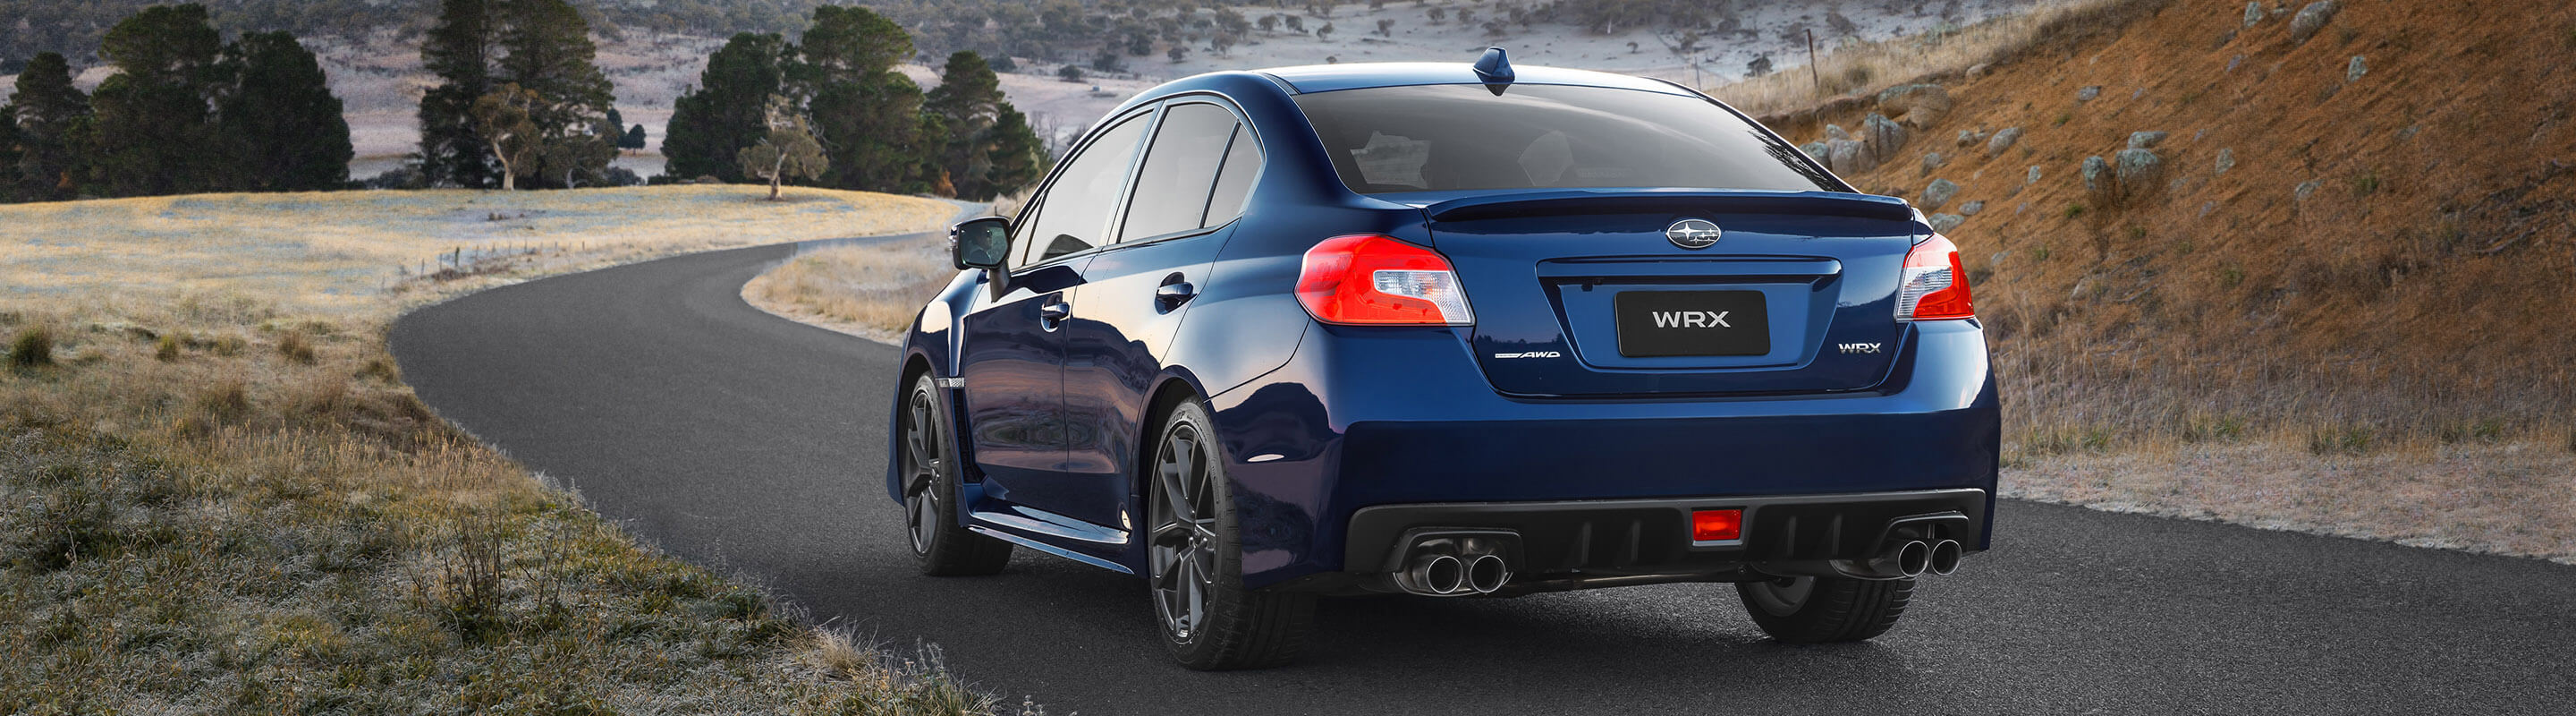 Top Performance Sedans | Subaru Australia